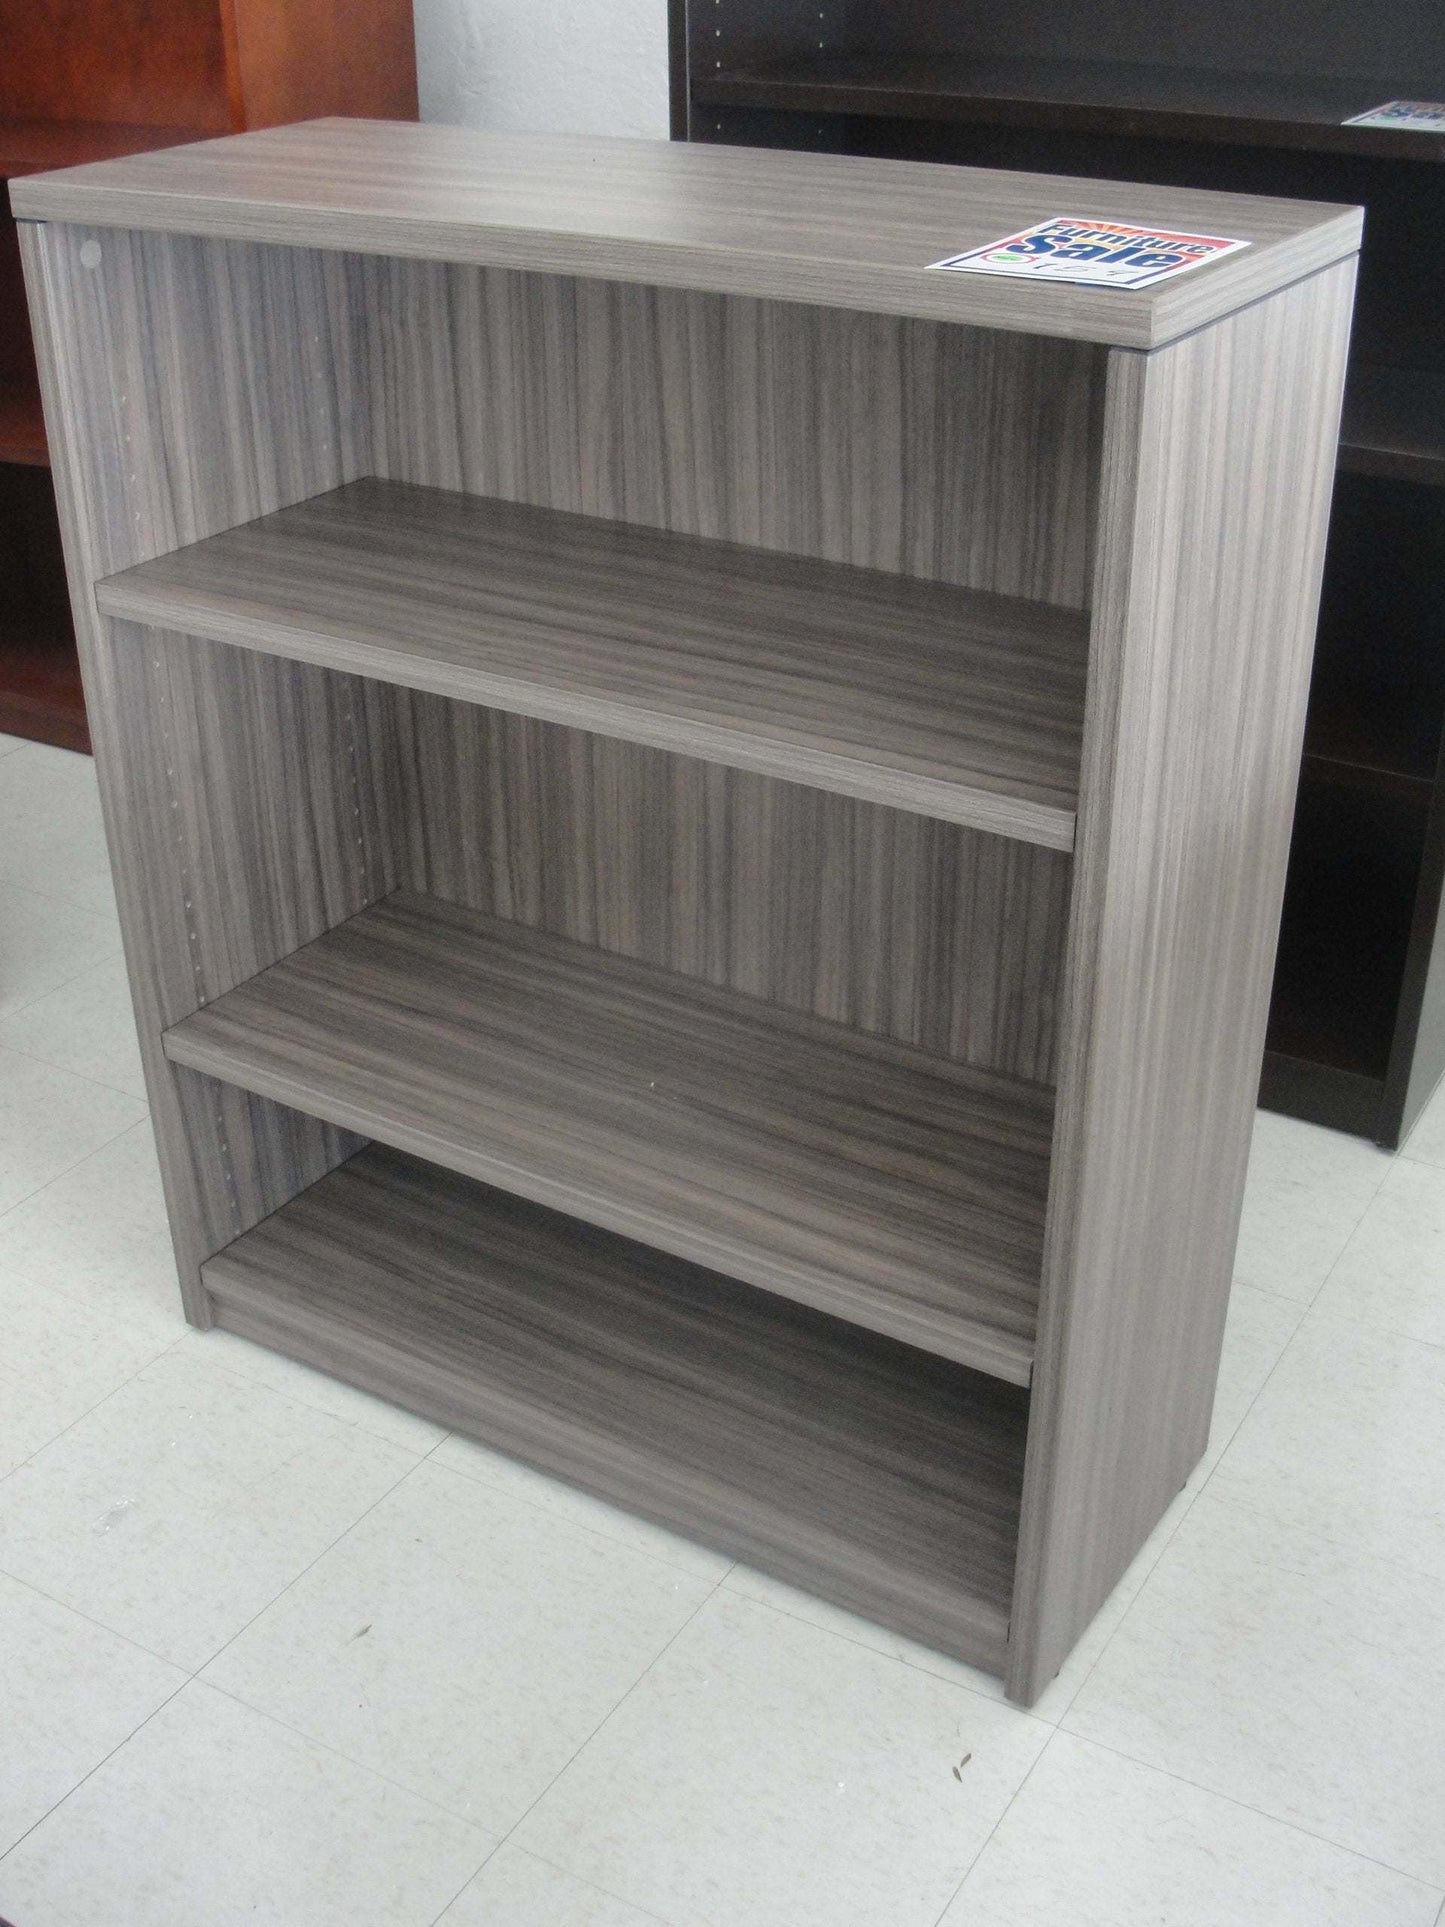 New Napa 3 shelf bookcase